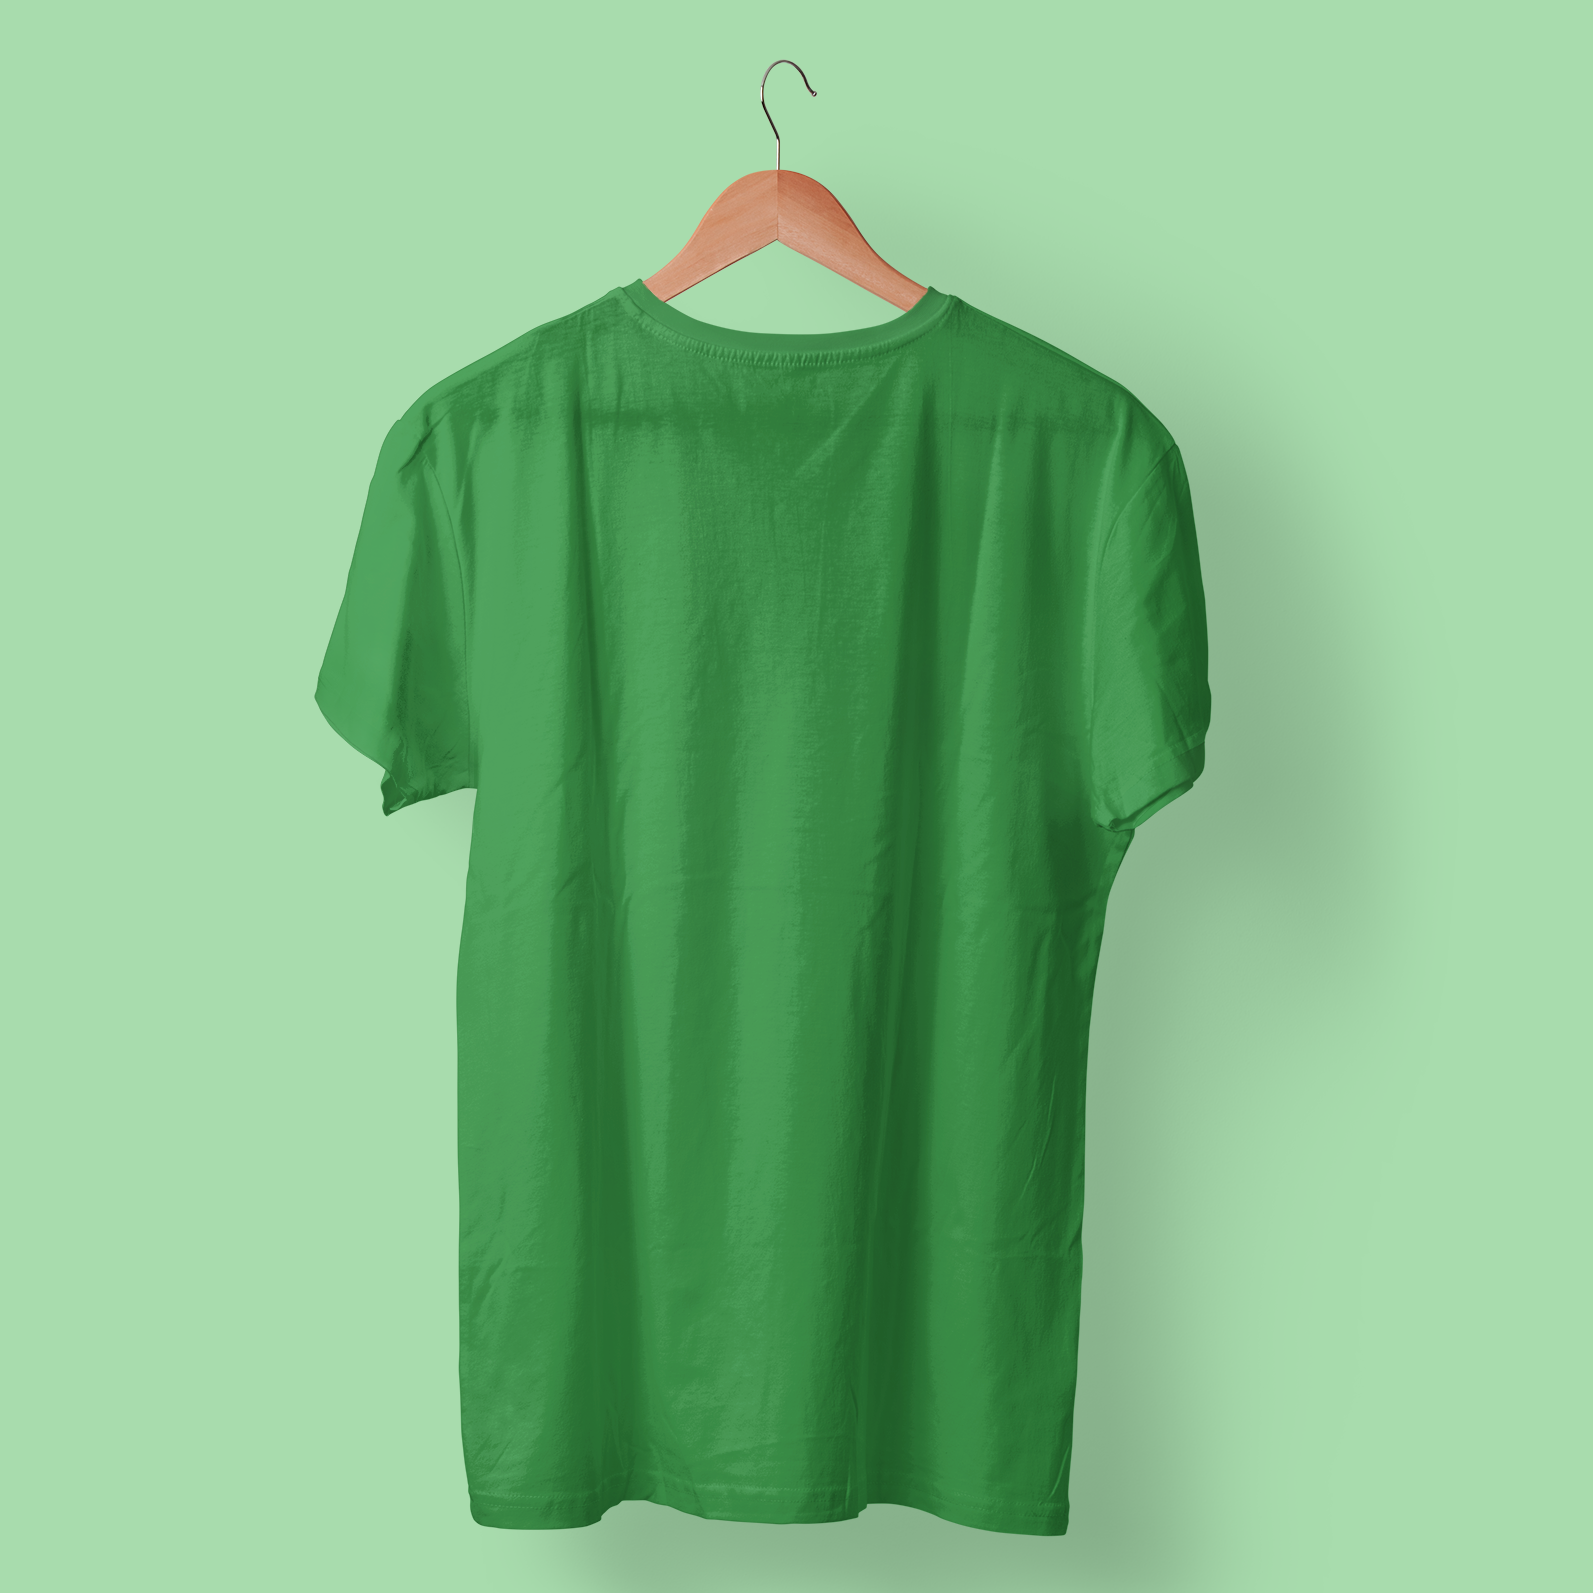 Tee-shirt homme - Vert uni